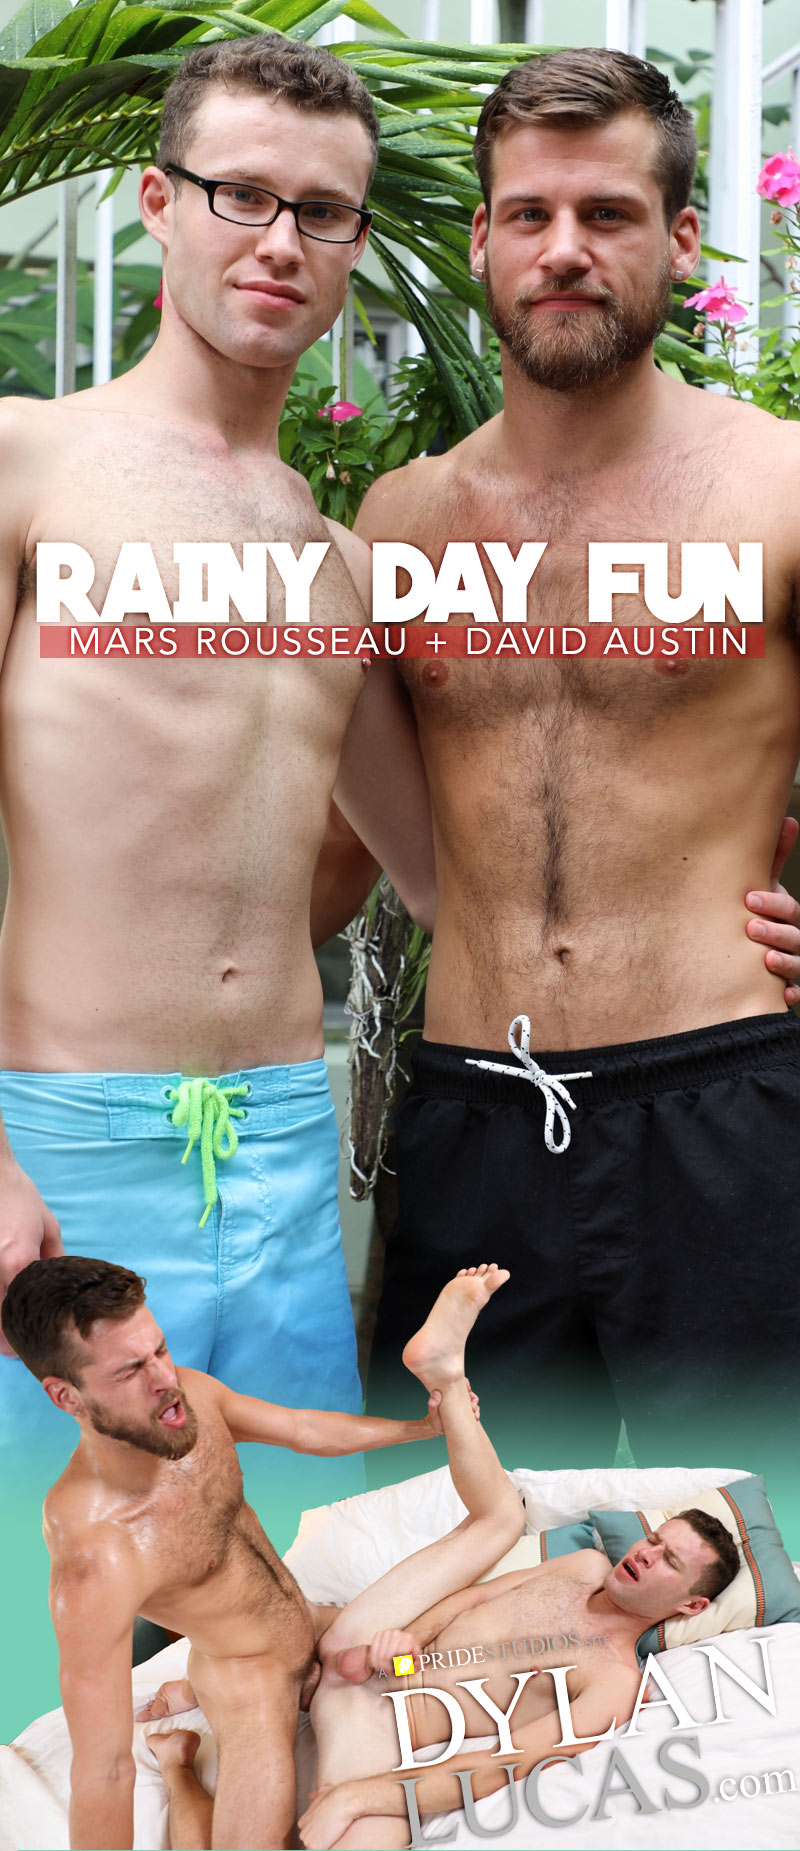 Rainy Day Fun (Mars Rousseau Fucks David Austin) at DylanLucas